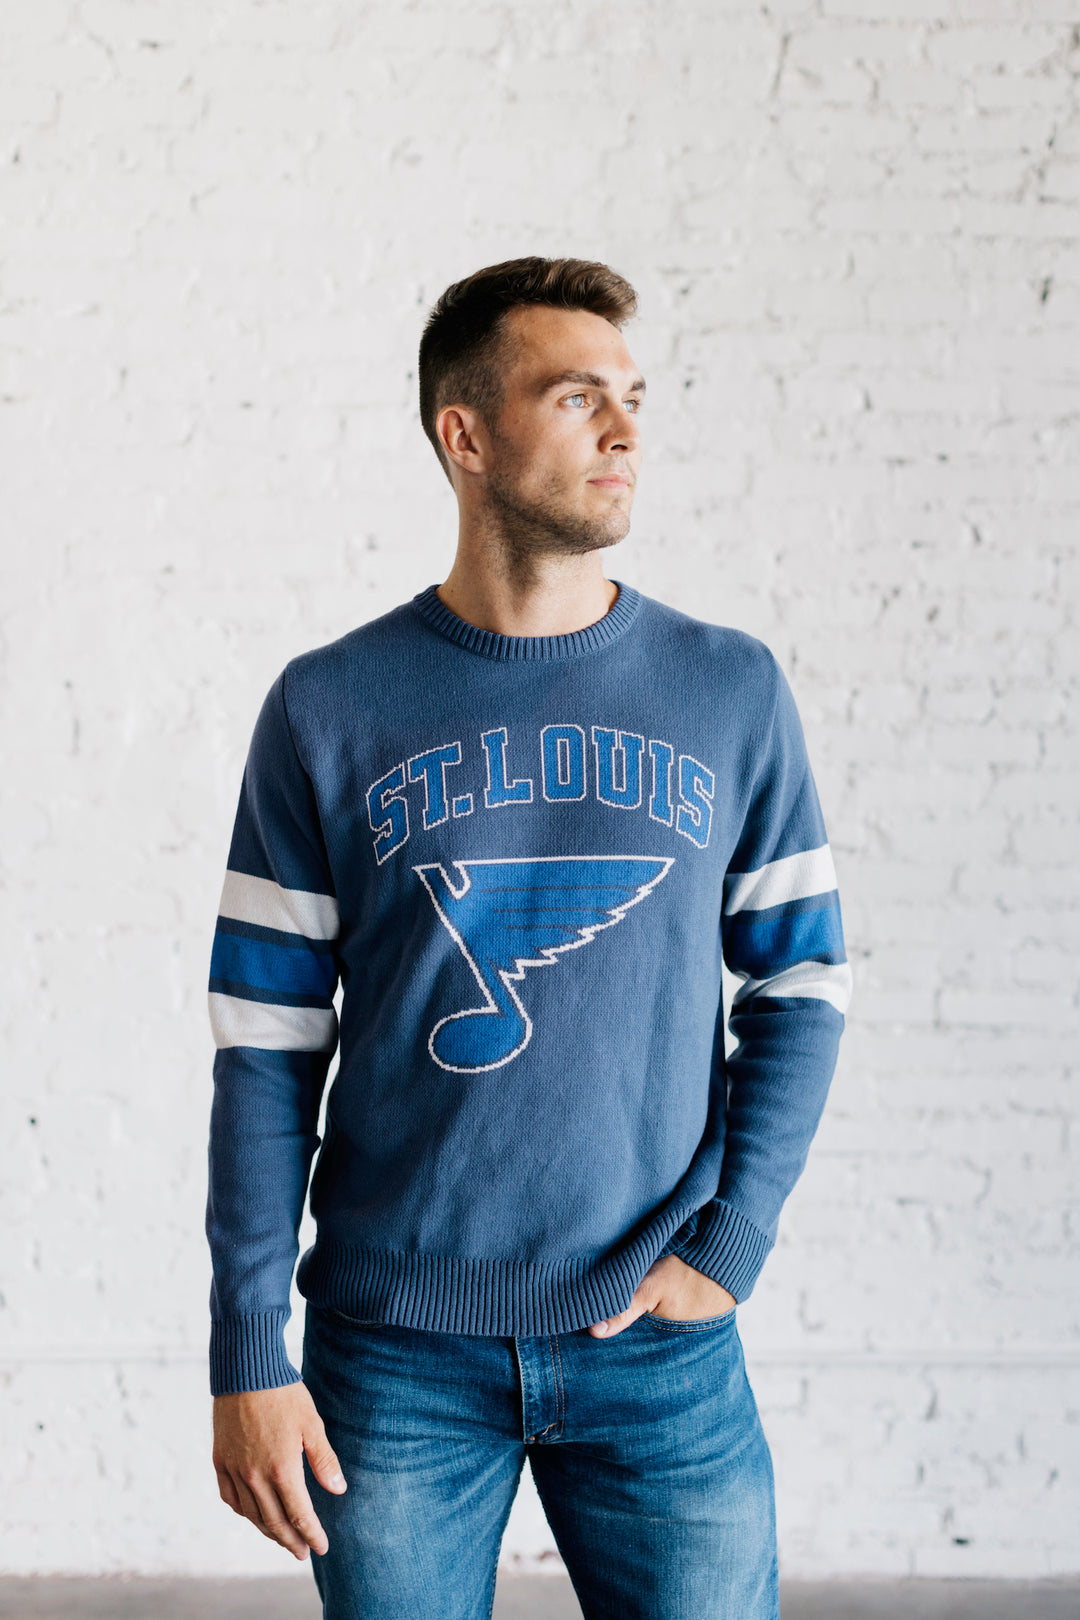 St Louis vs errbody Unisex Crewneck Sweatshirt